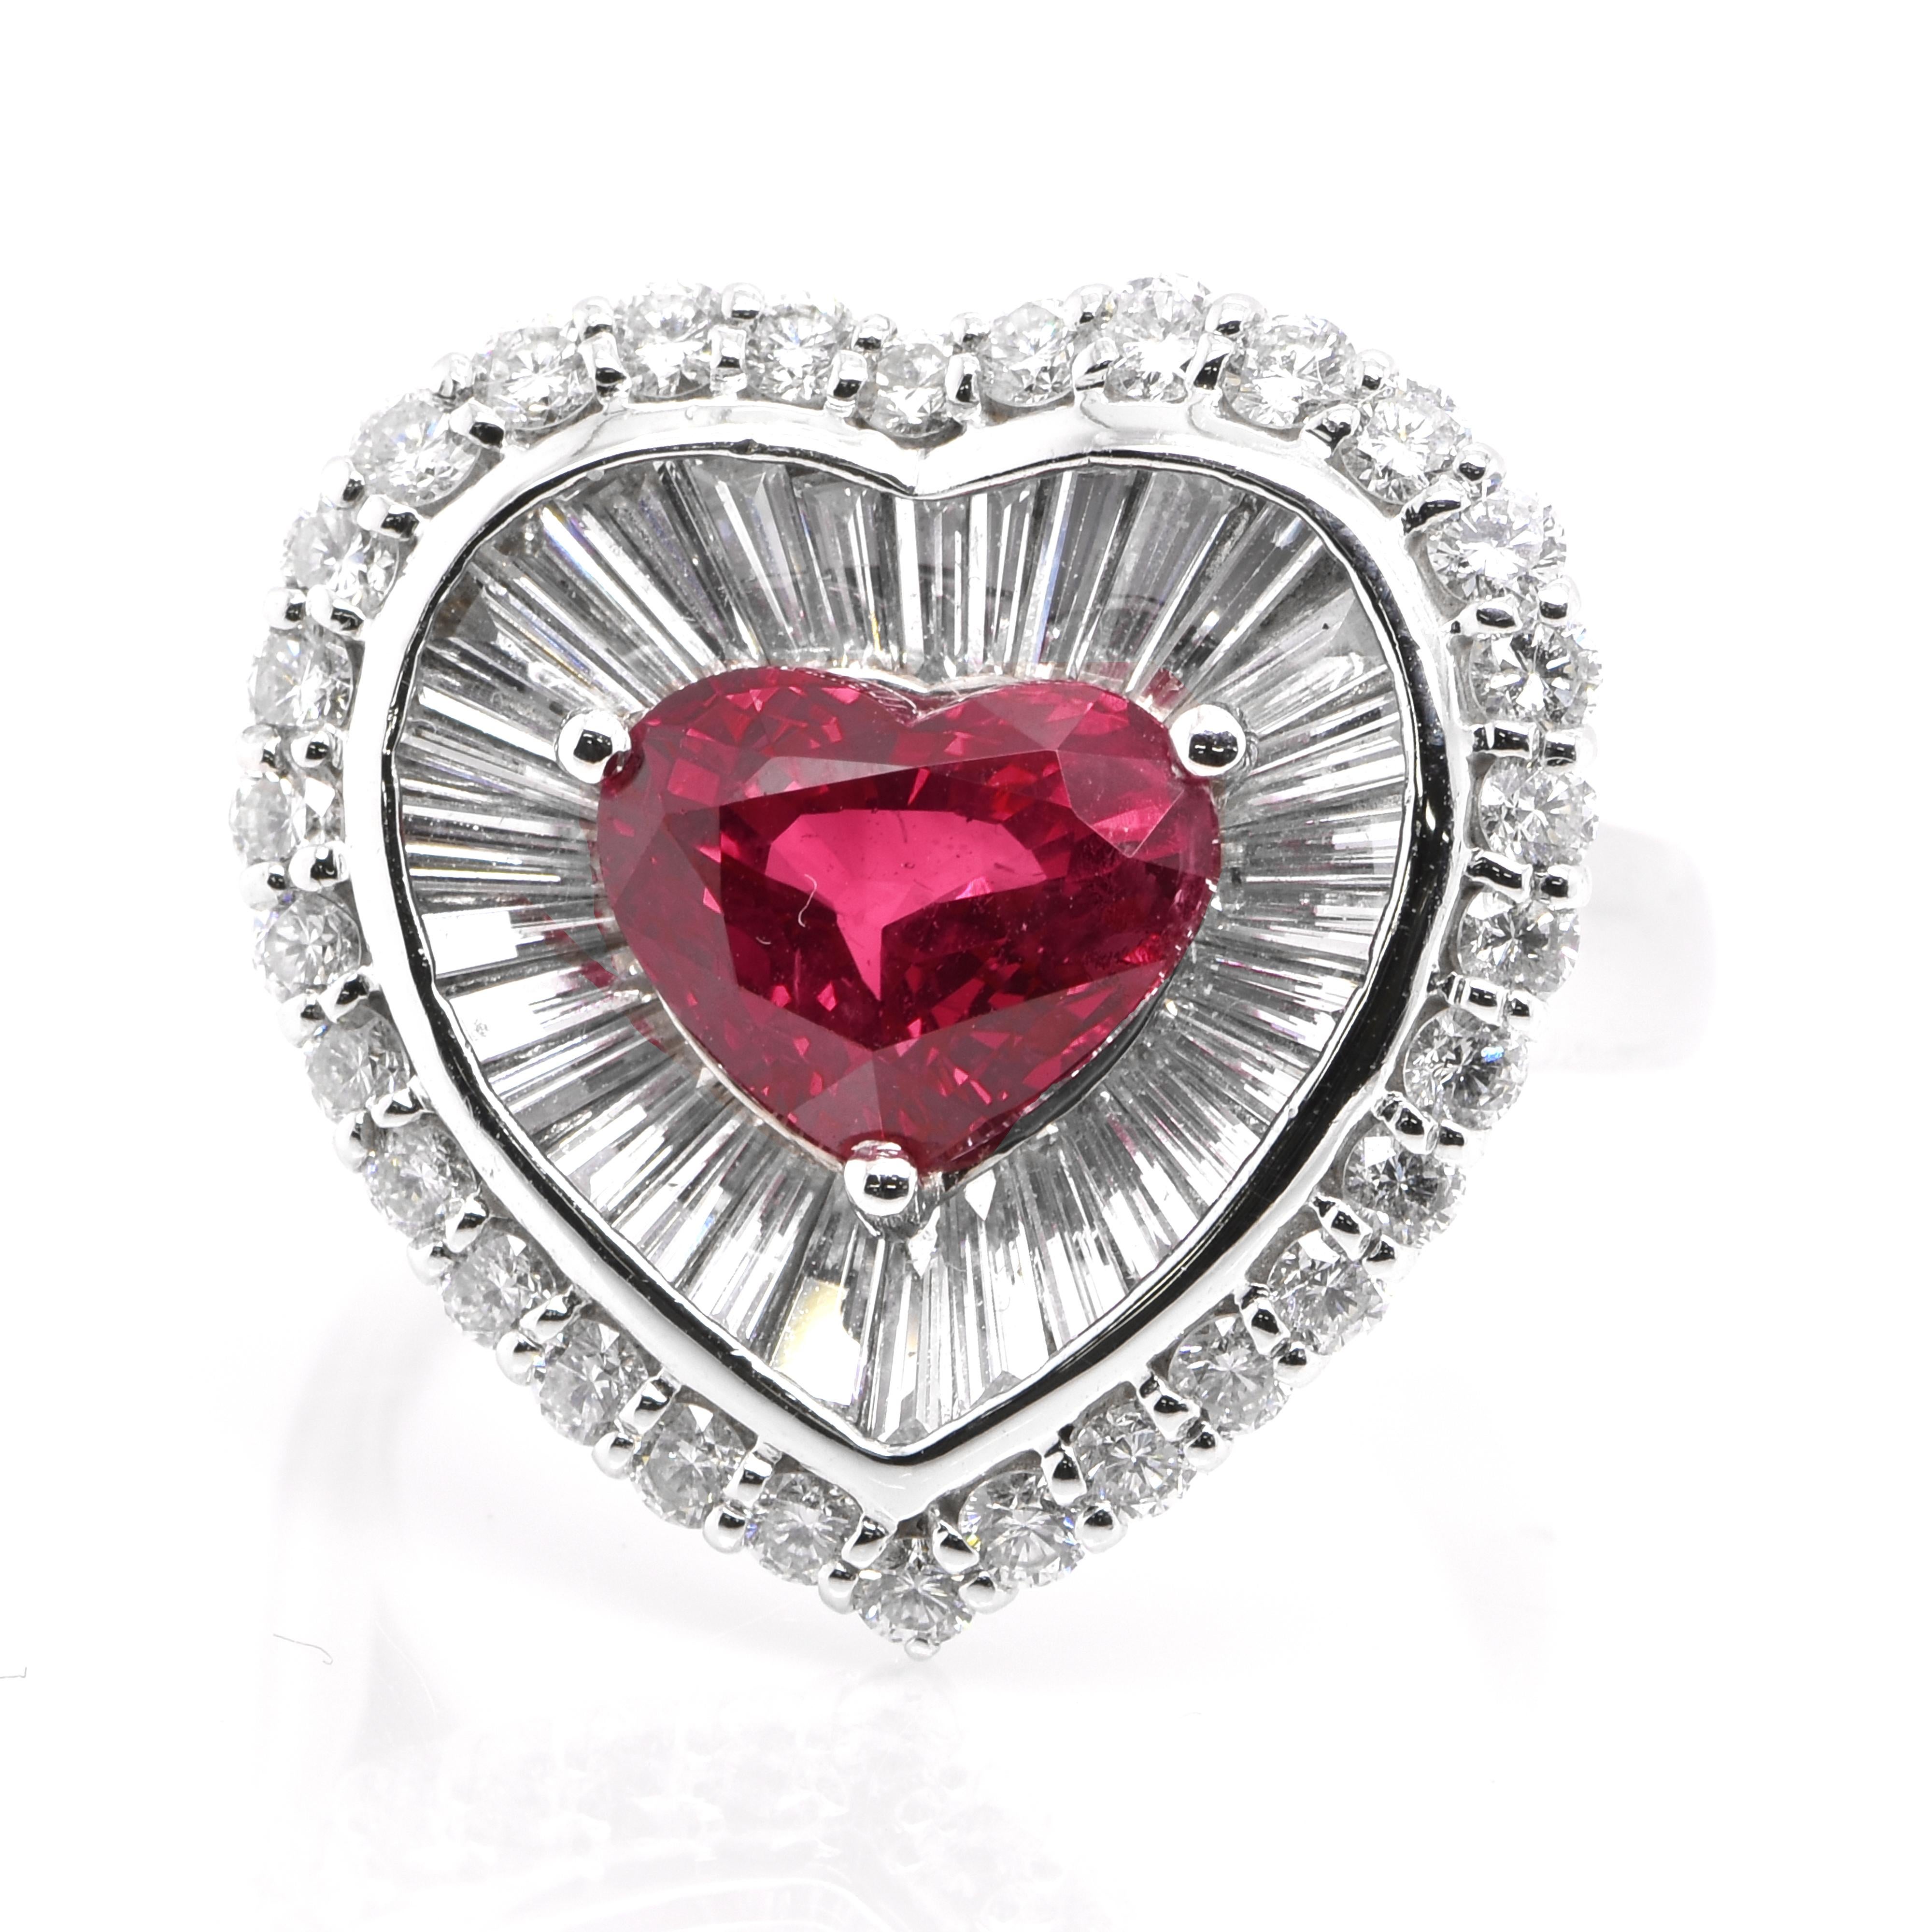 Modern GIA Certified 3.02 Carat Natural Burmese Ruby and Diamond Ring Set in Platinum